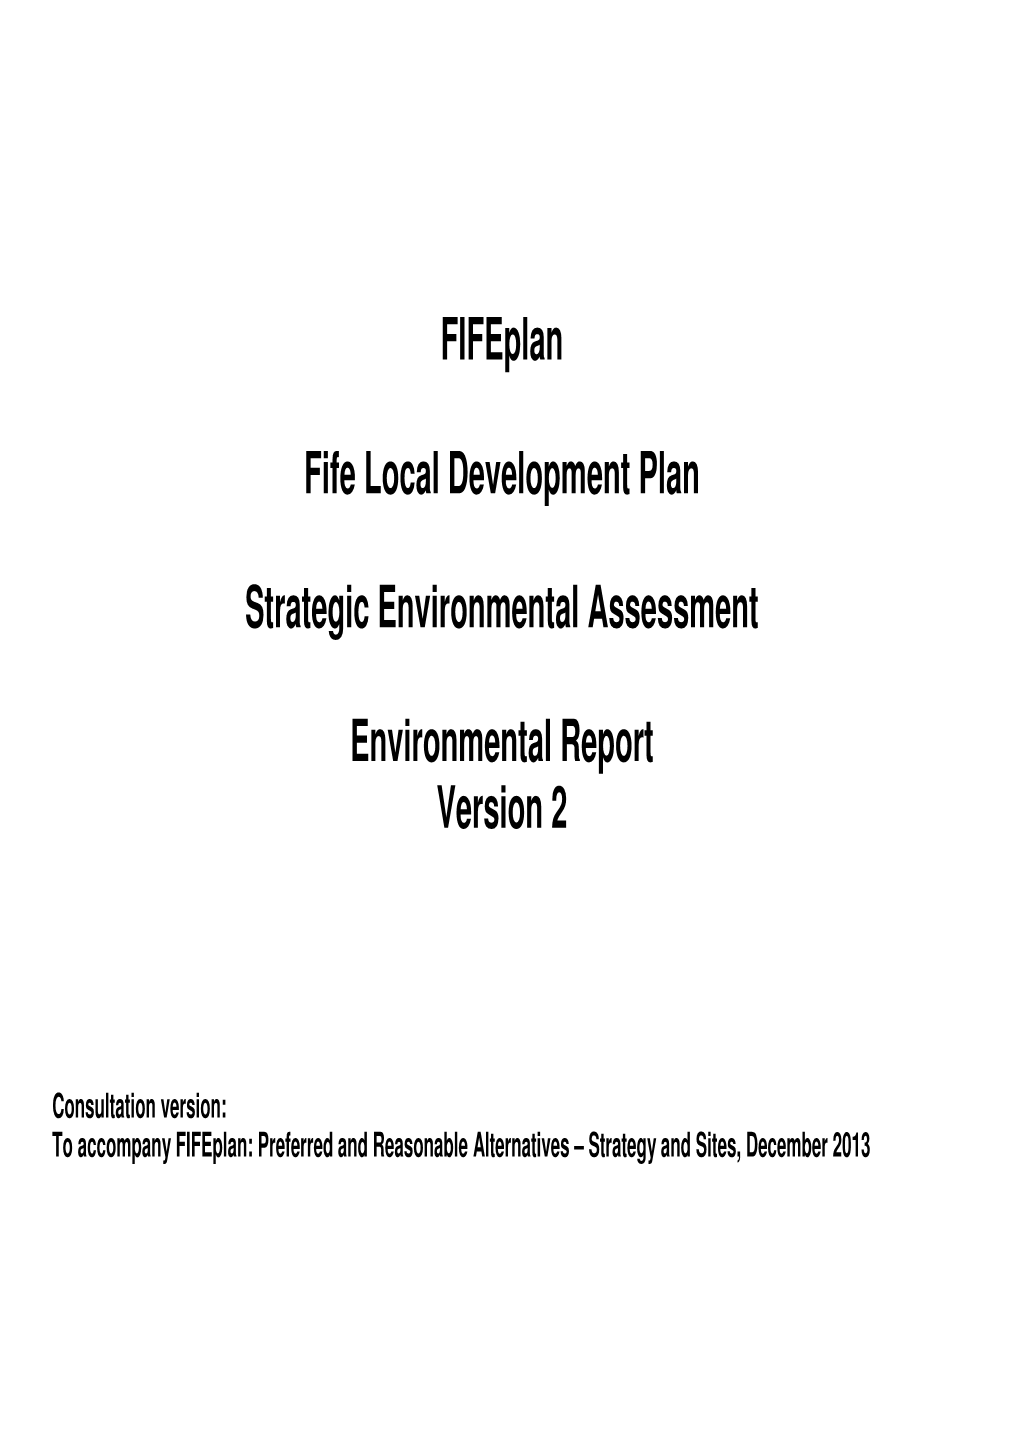 Fifeplan Fife Local Development Plan Strategic Environmental